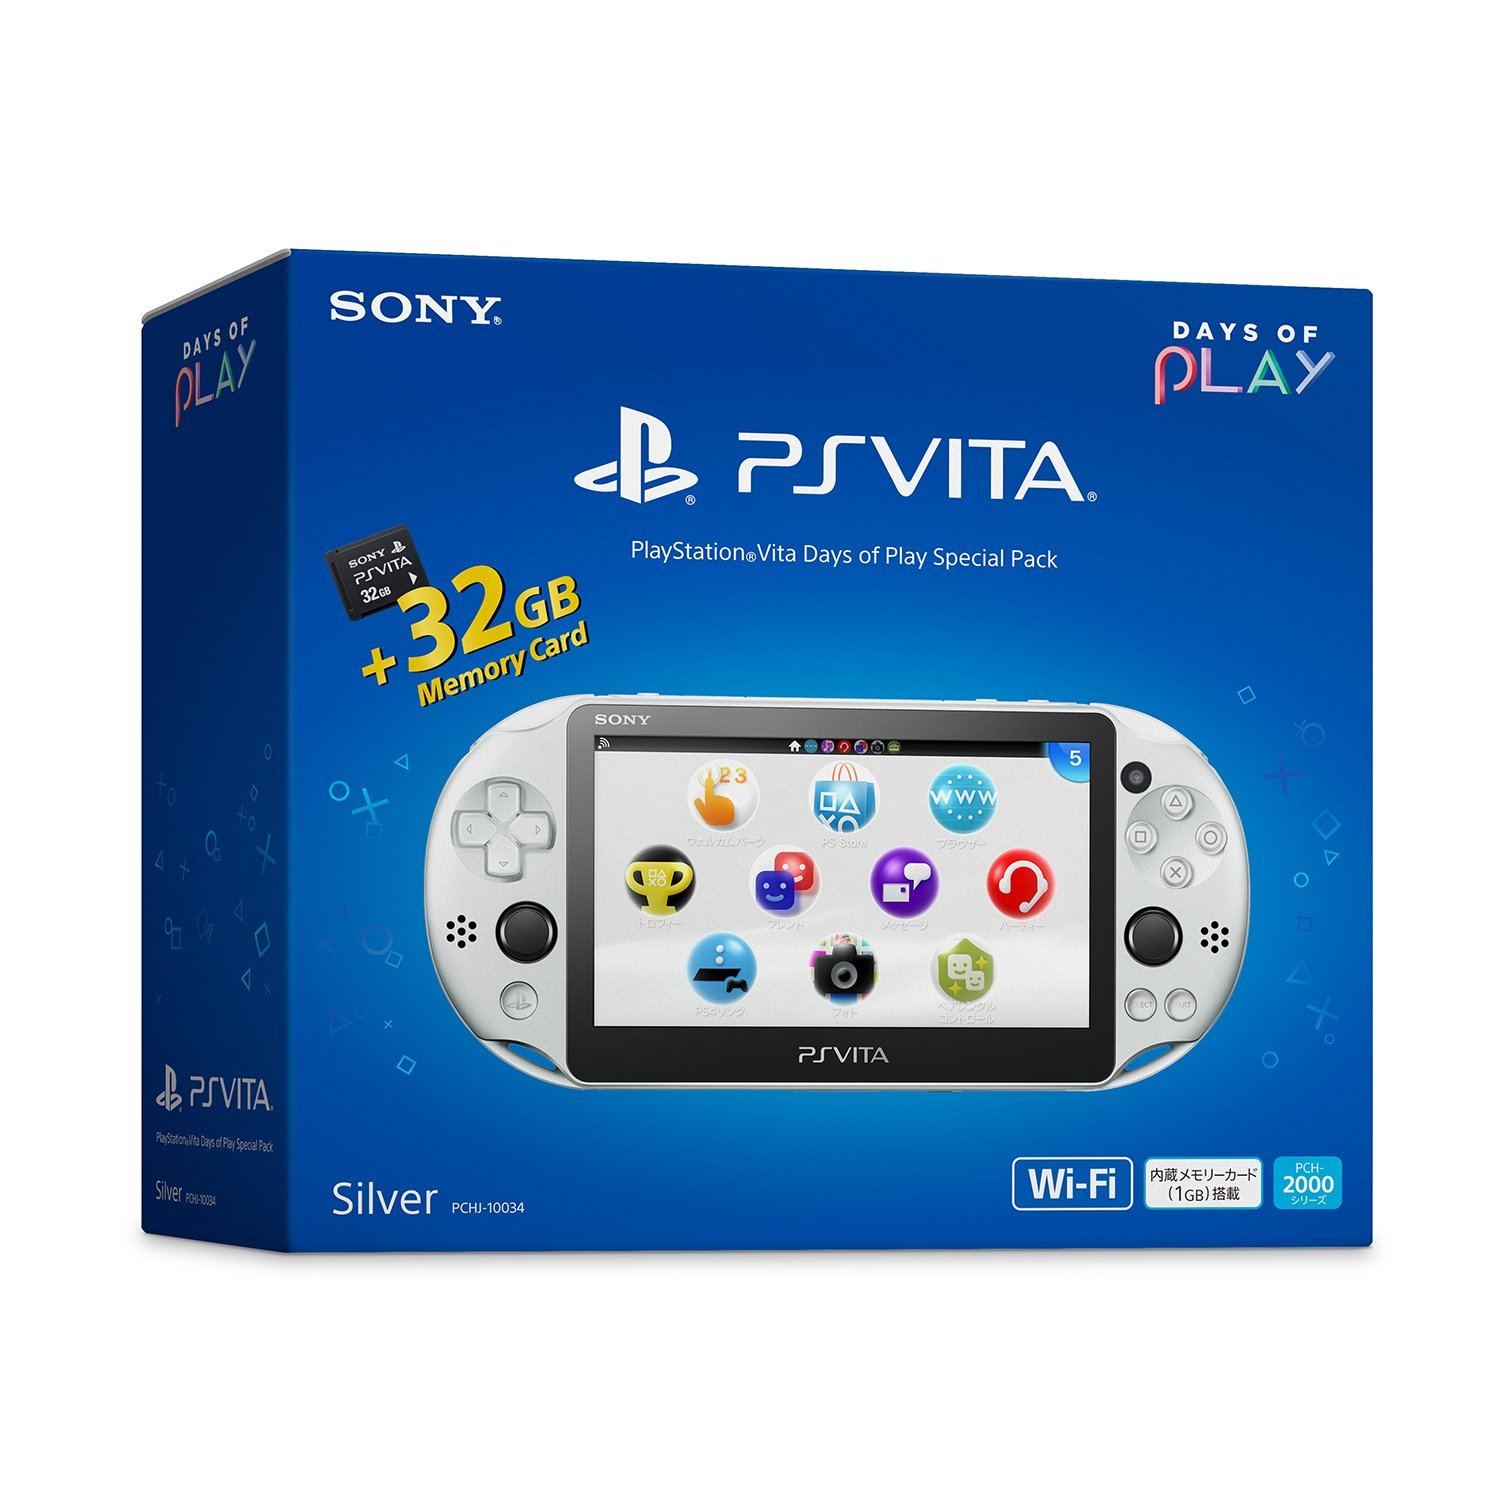 Ps vita collection. PLAYSTATION Vita Sony PCH-1101. PSP Vita Emulator Sony PLAYSTATION. Sony PLAYSTATION Vita ГШ.